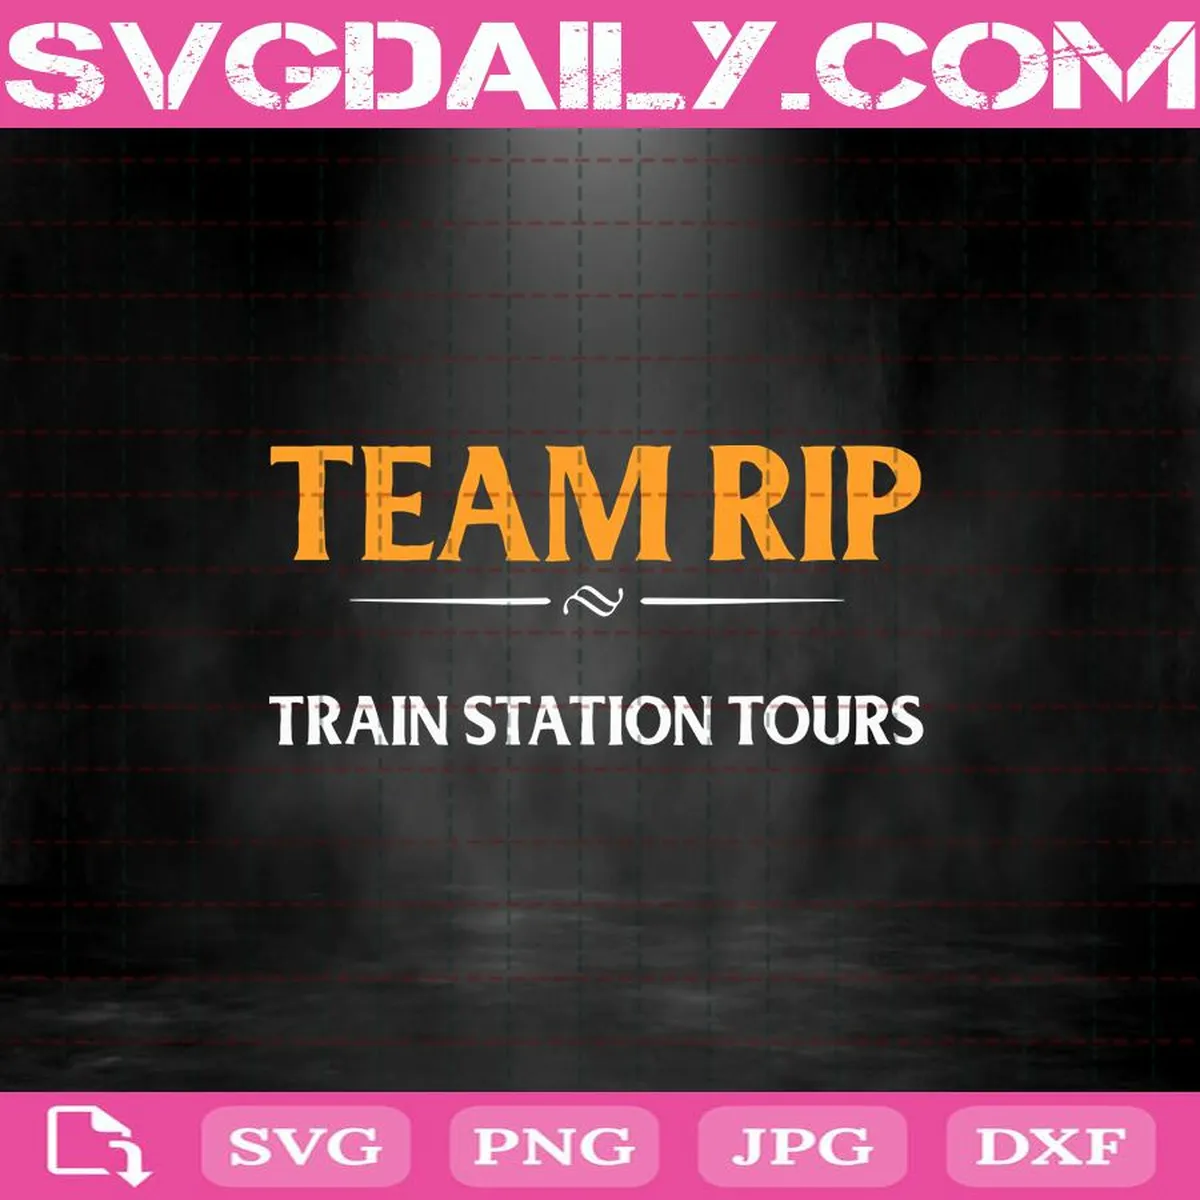 Team Rip Train Station Tours Svg, Train Station Svg, Train Svg, Team Rip Train Station Svg, Tour Svg, Train Tour Svg